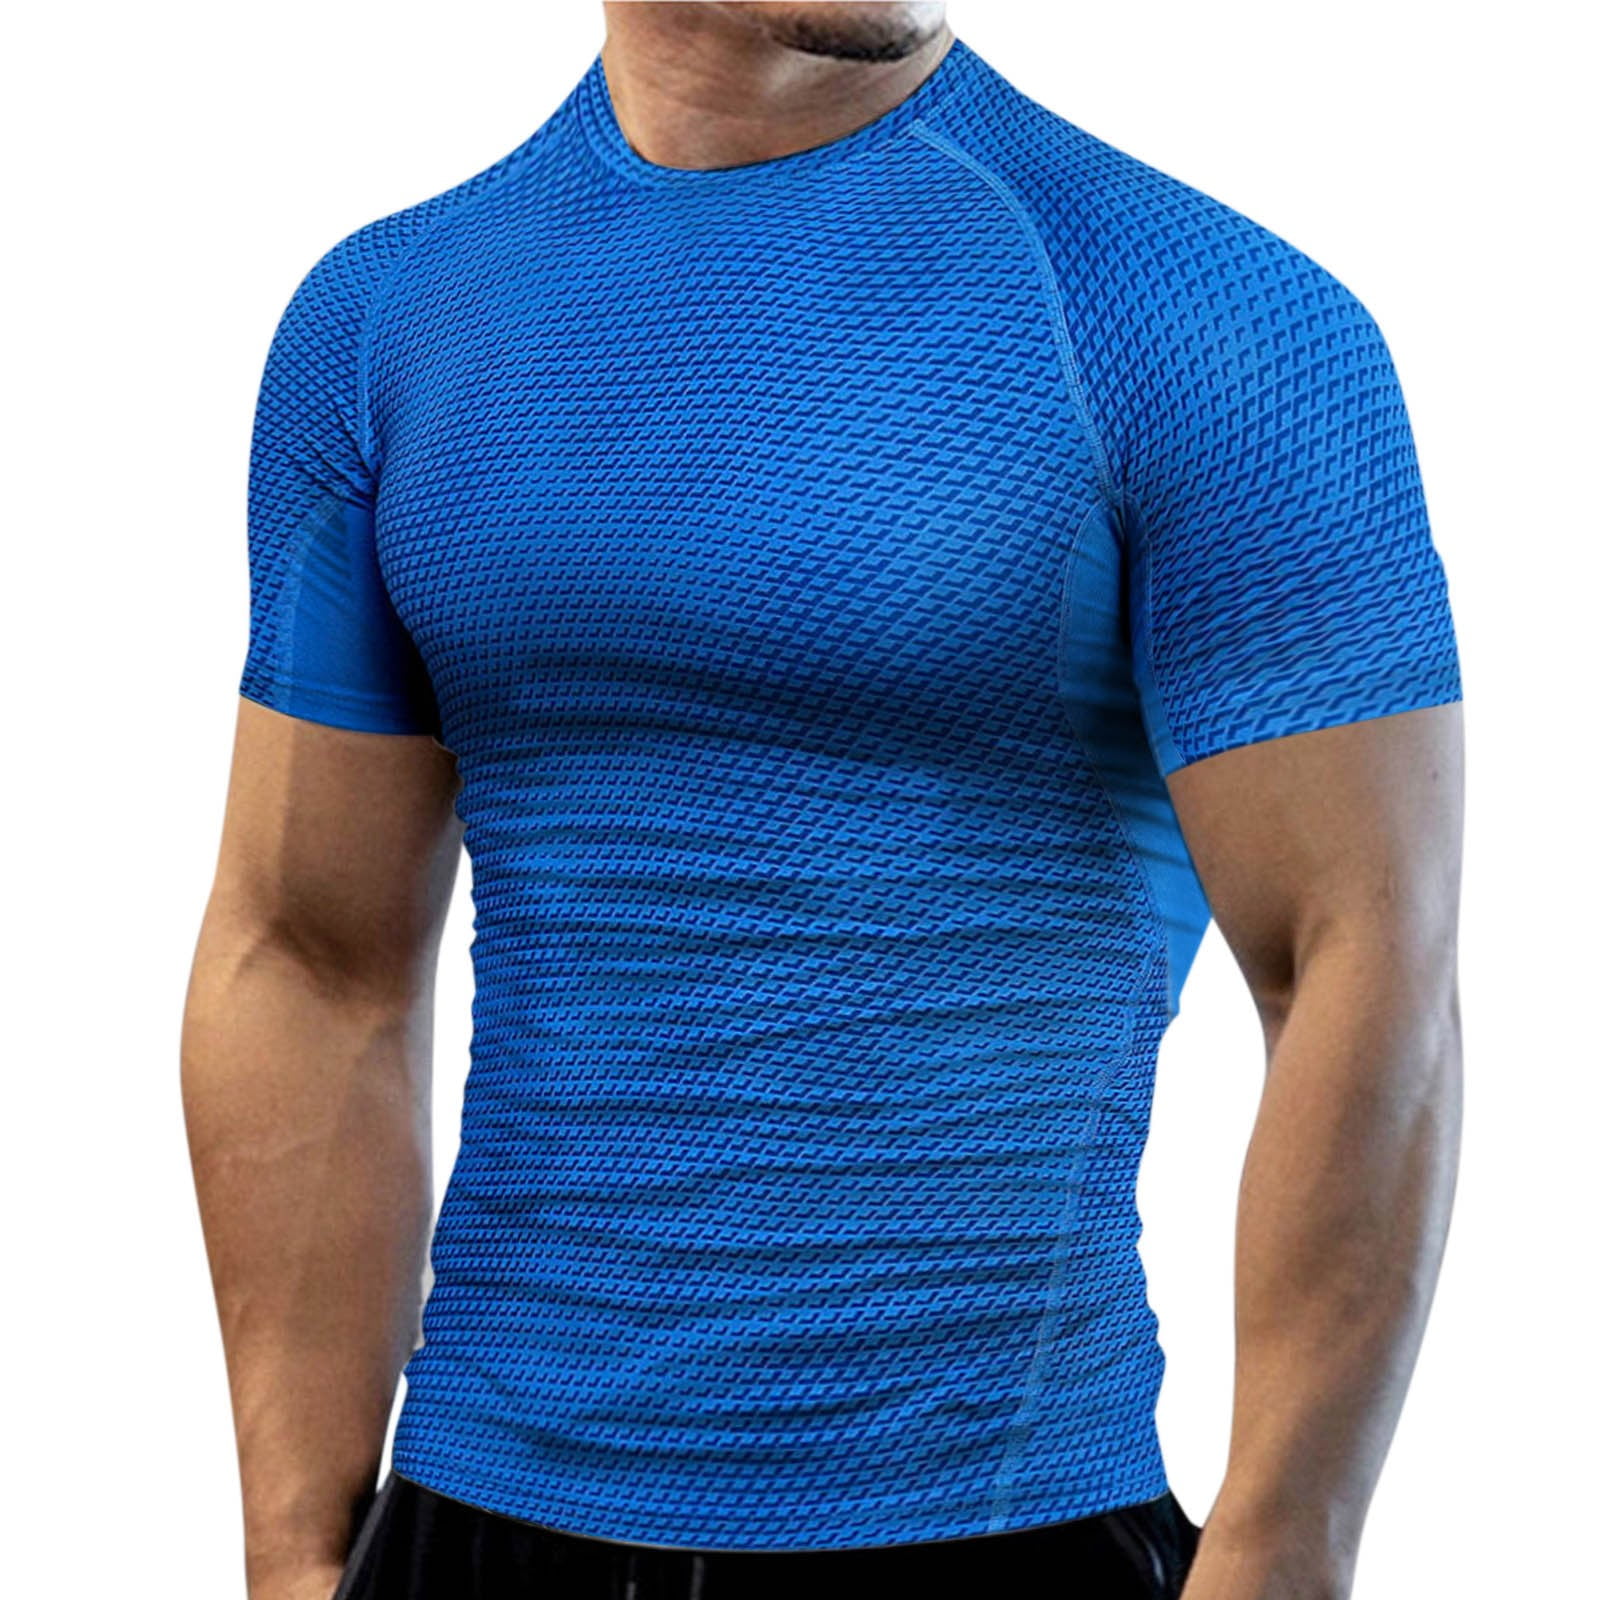 fvwitlyh Pocket T Shirts for Mens Sleeve Rashguard Swimwear Quick Dry Swim Shirt Sun Loose Fit Blue Blue Medium - Walmart.com